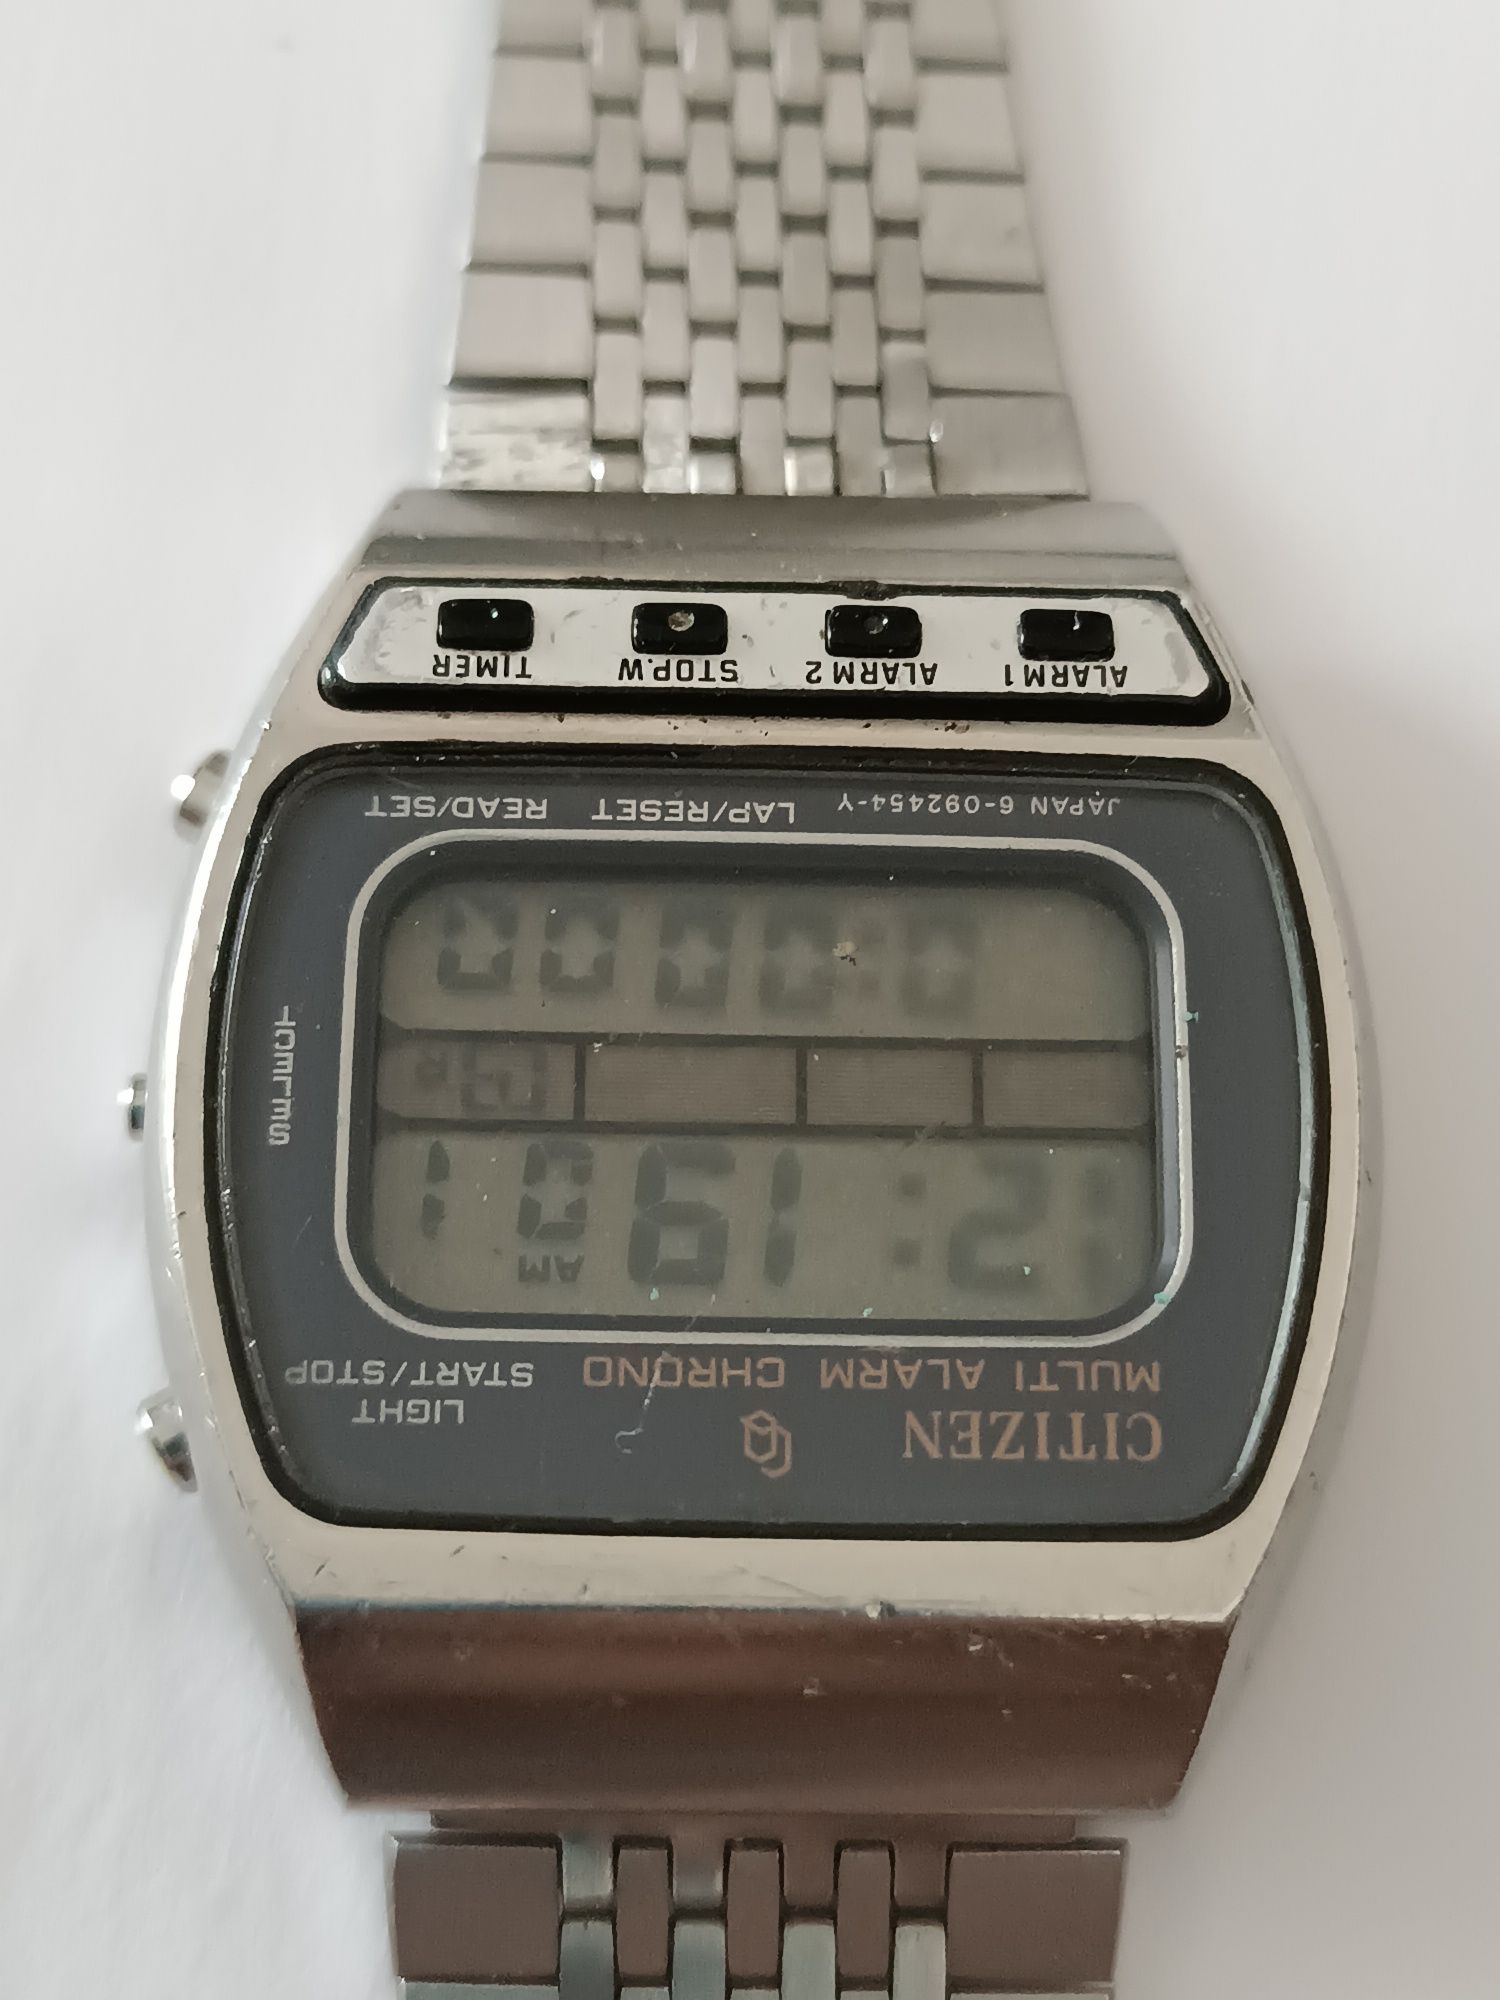 Ceas Bărbătesc Vintage Citizen Digital Alarm/Chrono Japan